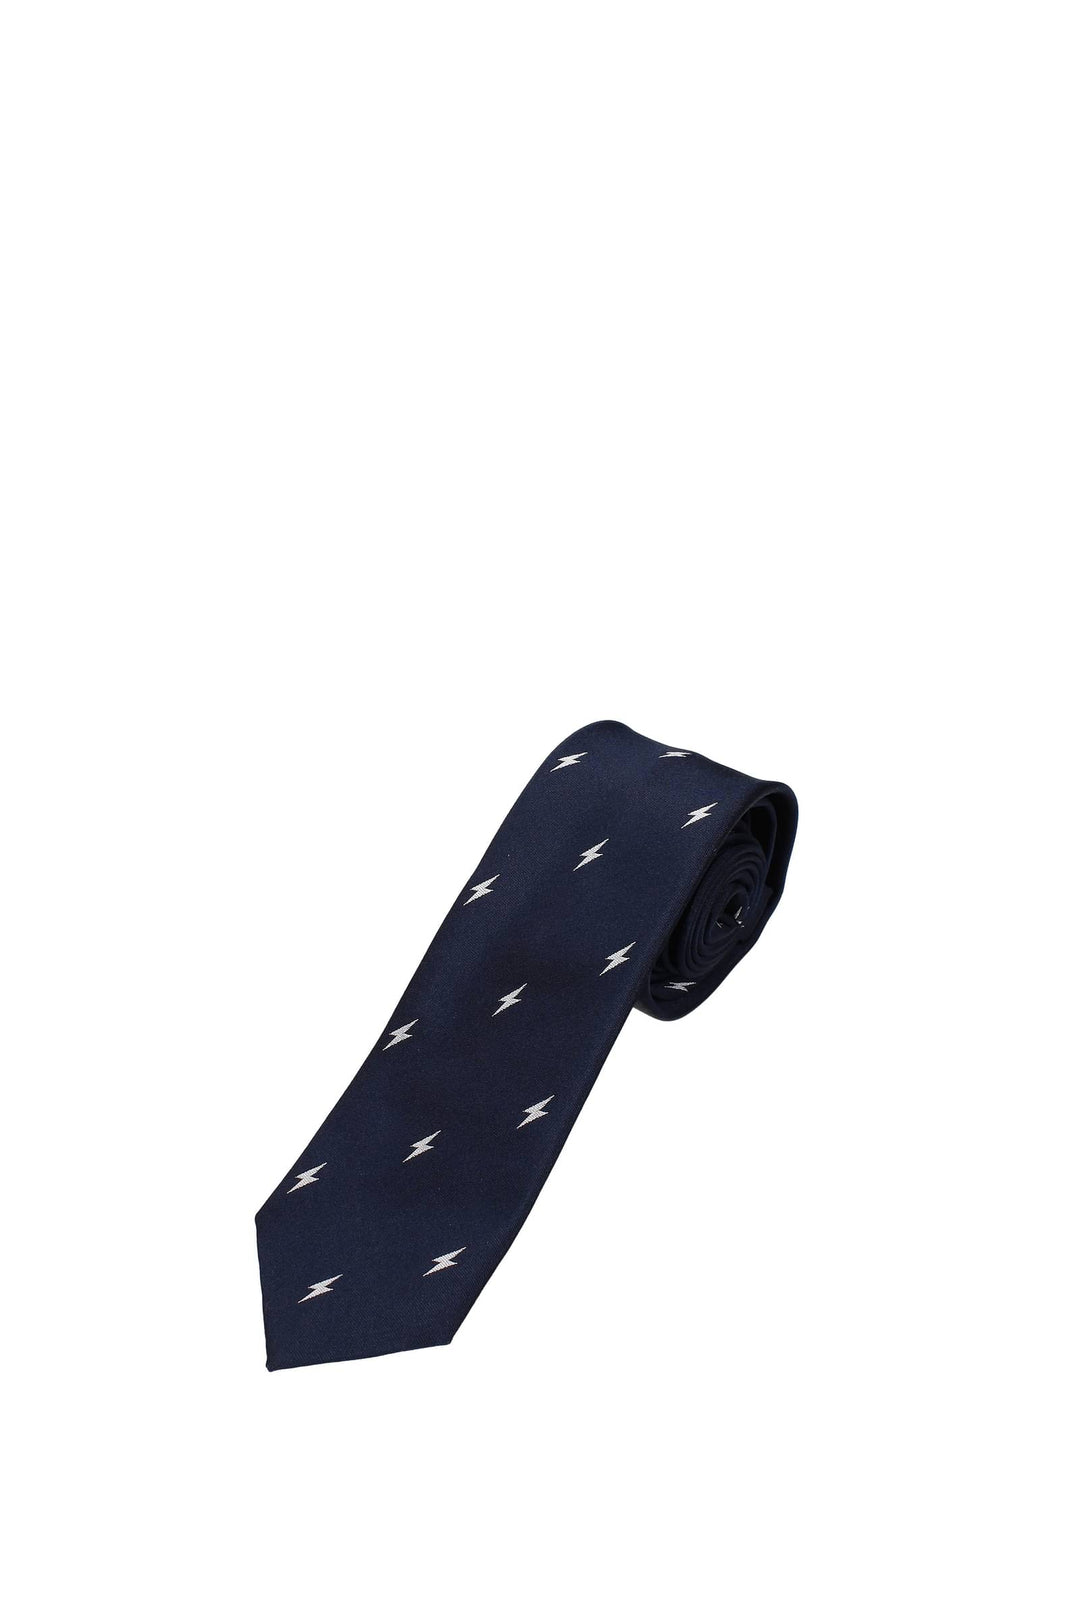 Cravatte Seta Blu Blu Navy - Neil Barrett - Uomo